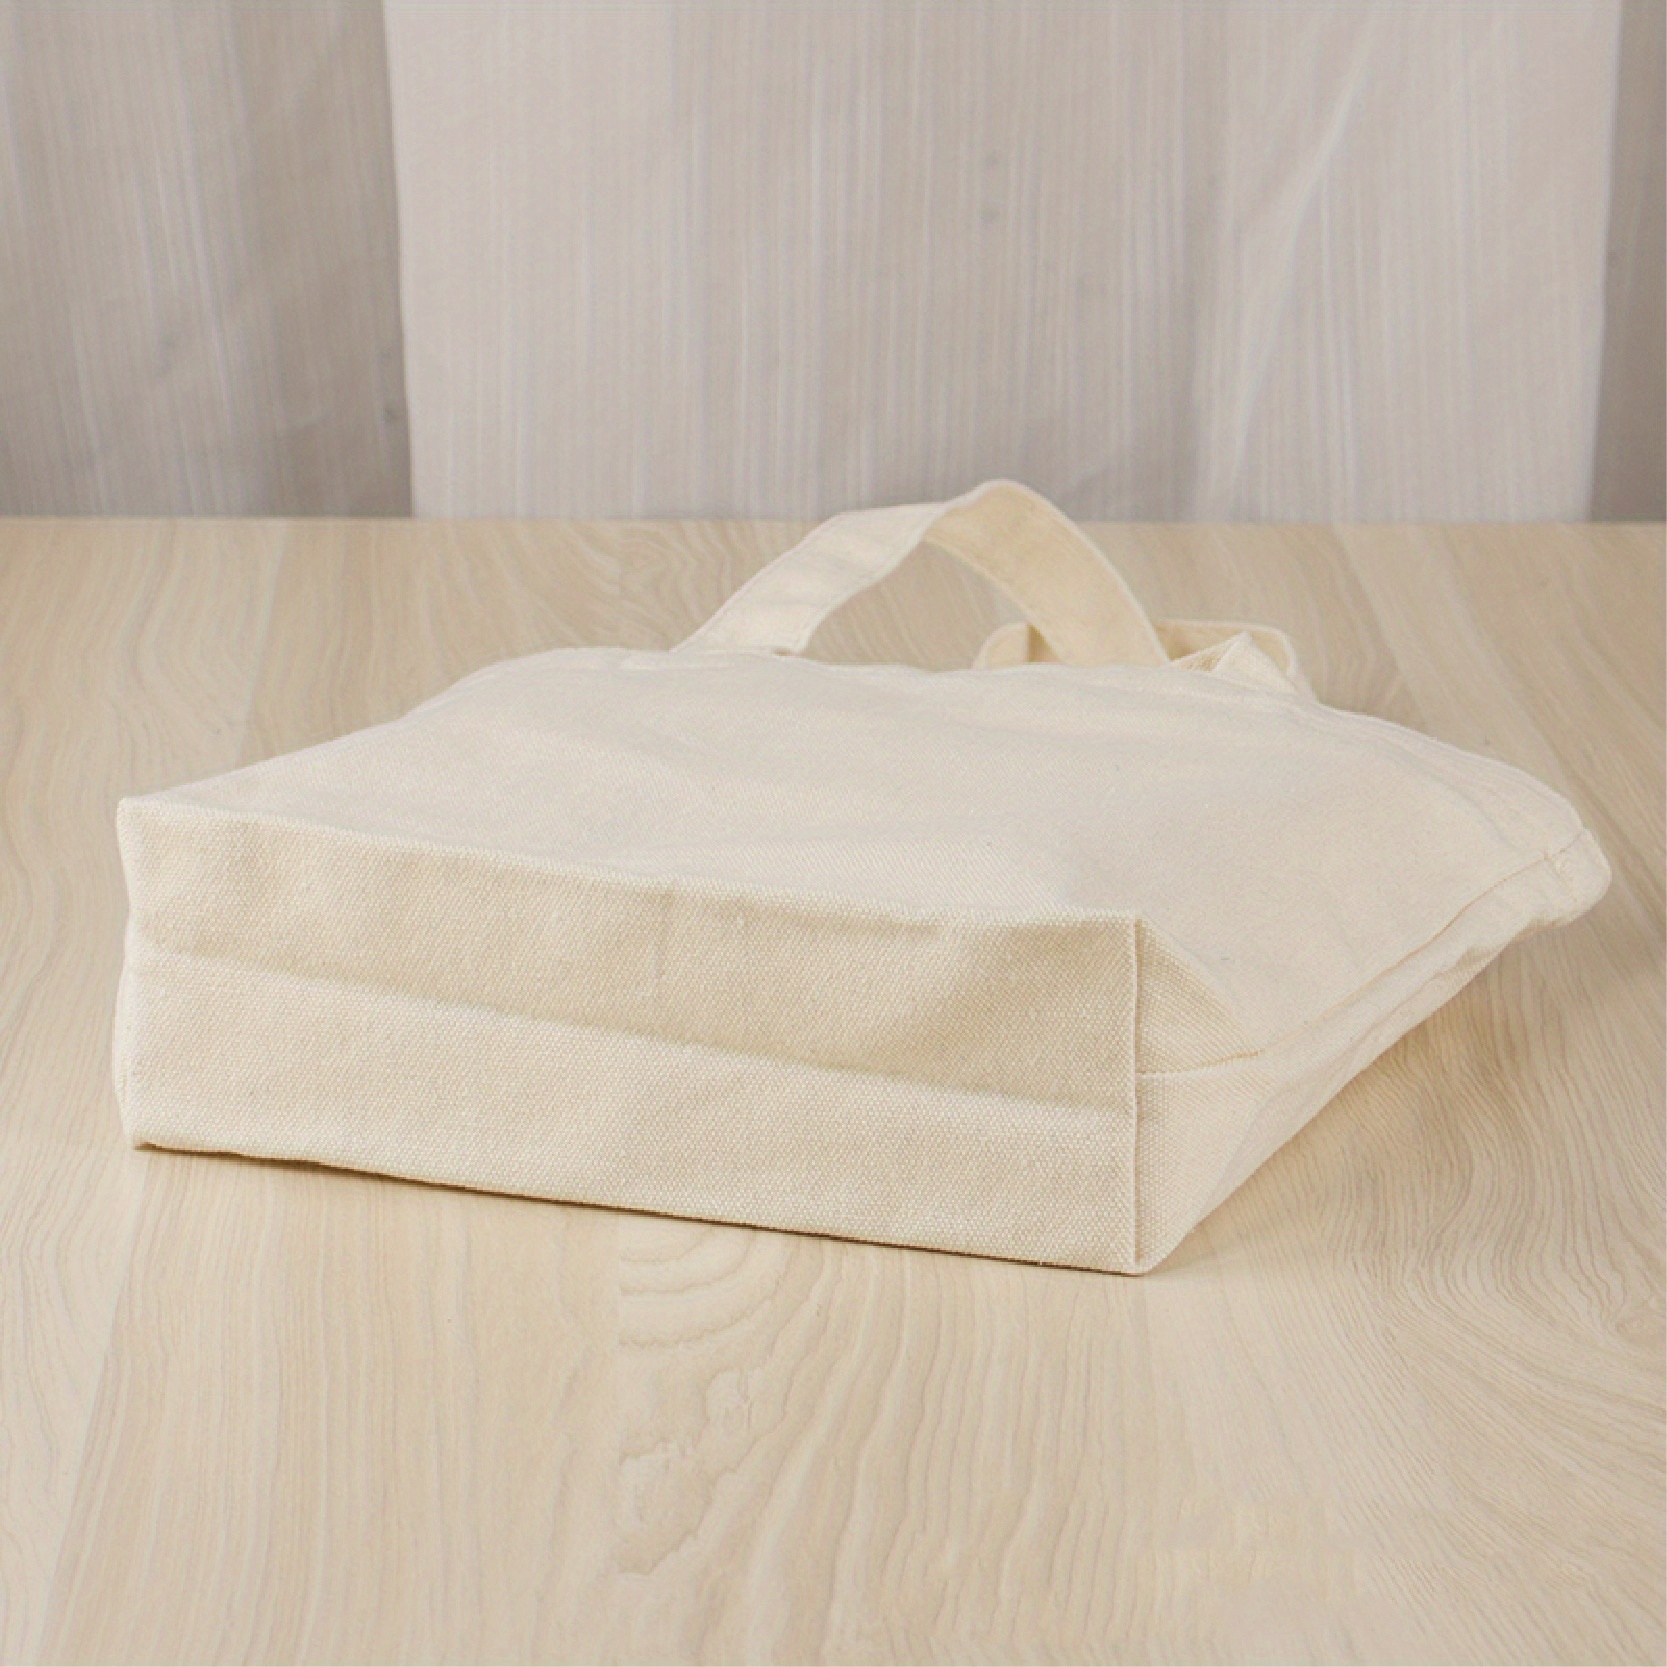 Shopping Bag Set Blank Canvas Tote Bag Reusable Gift - Temu